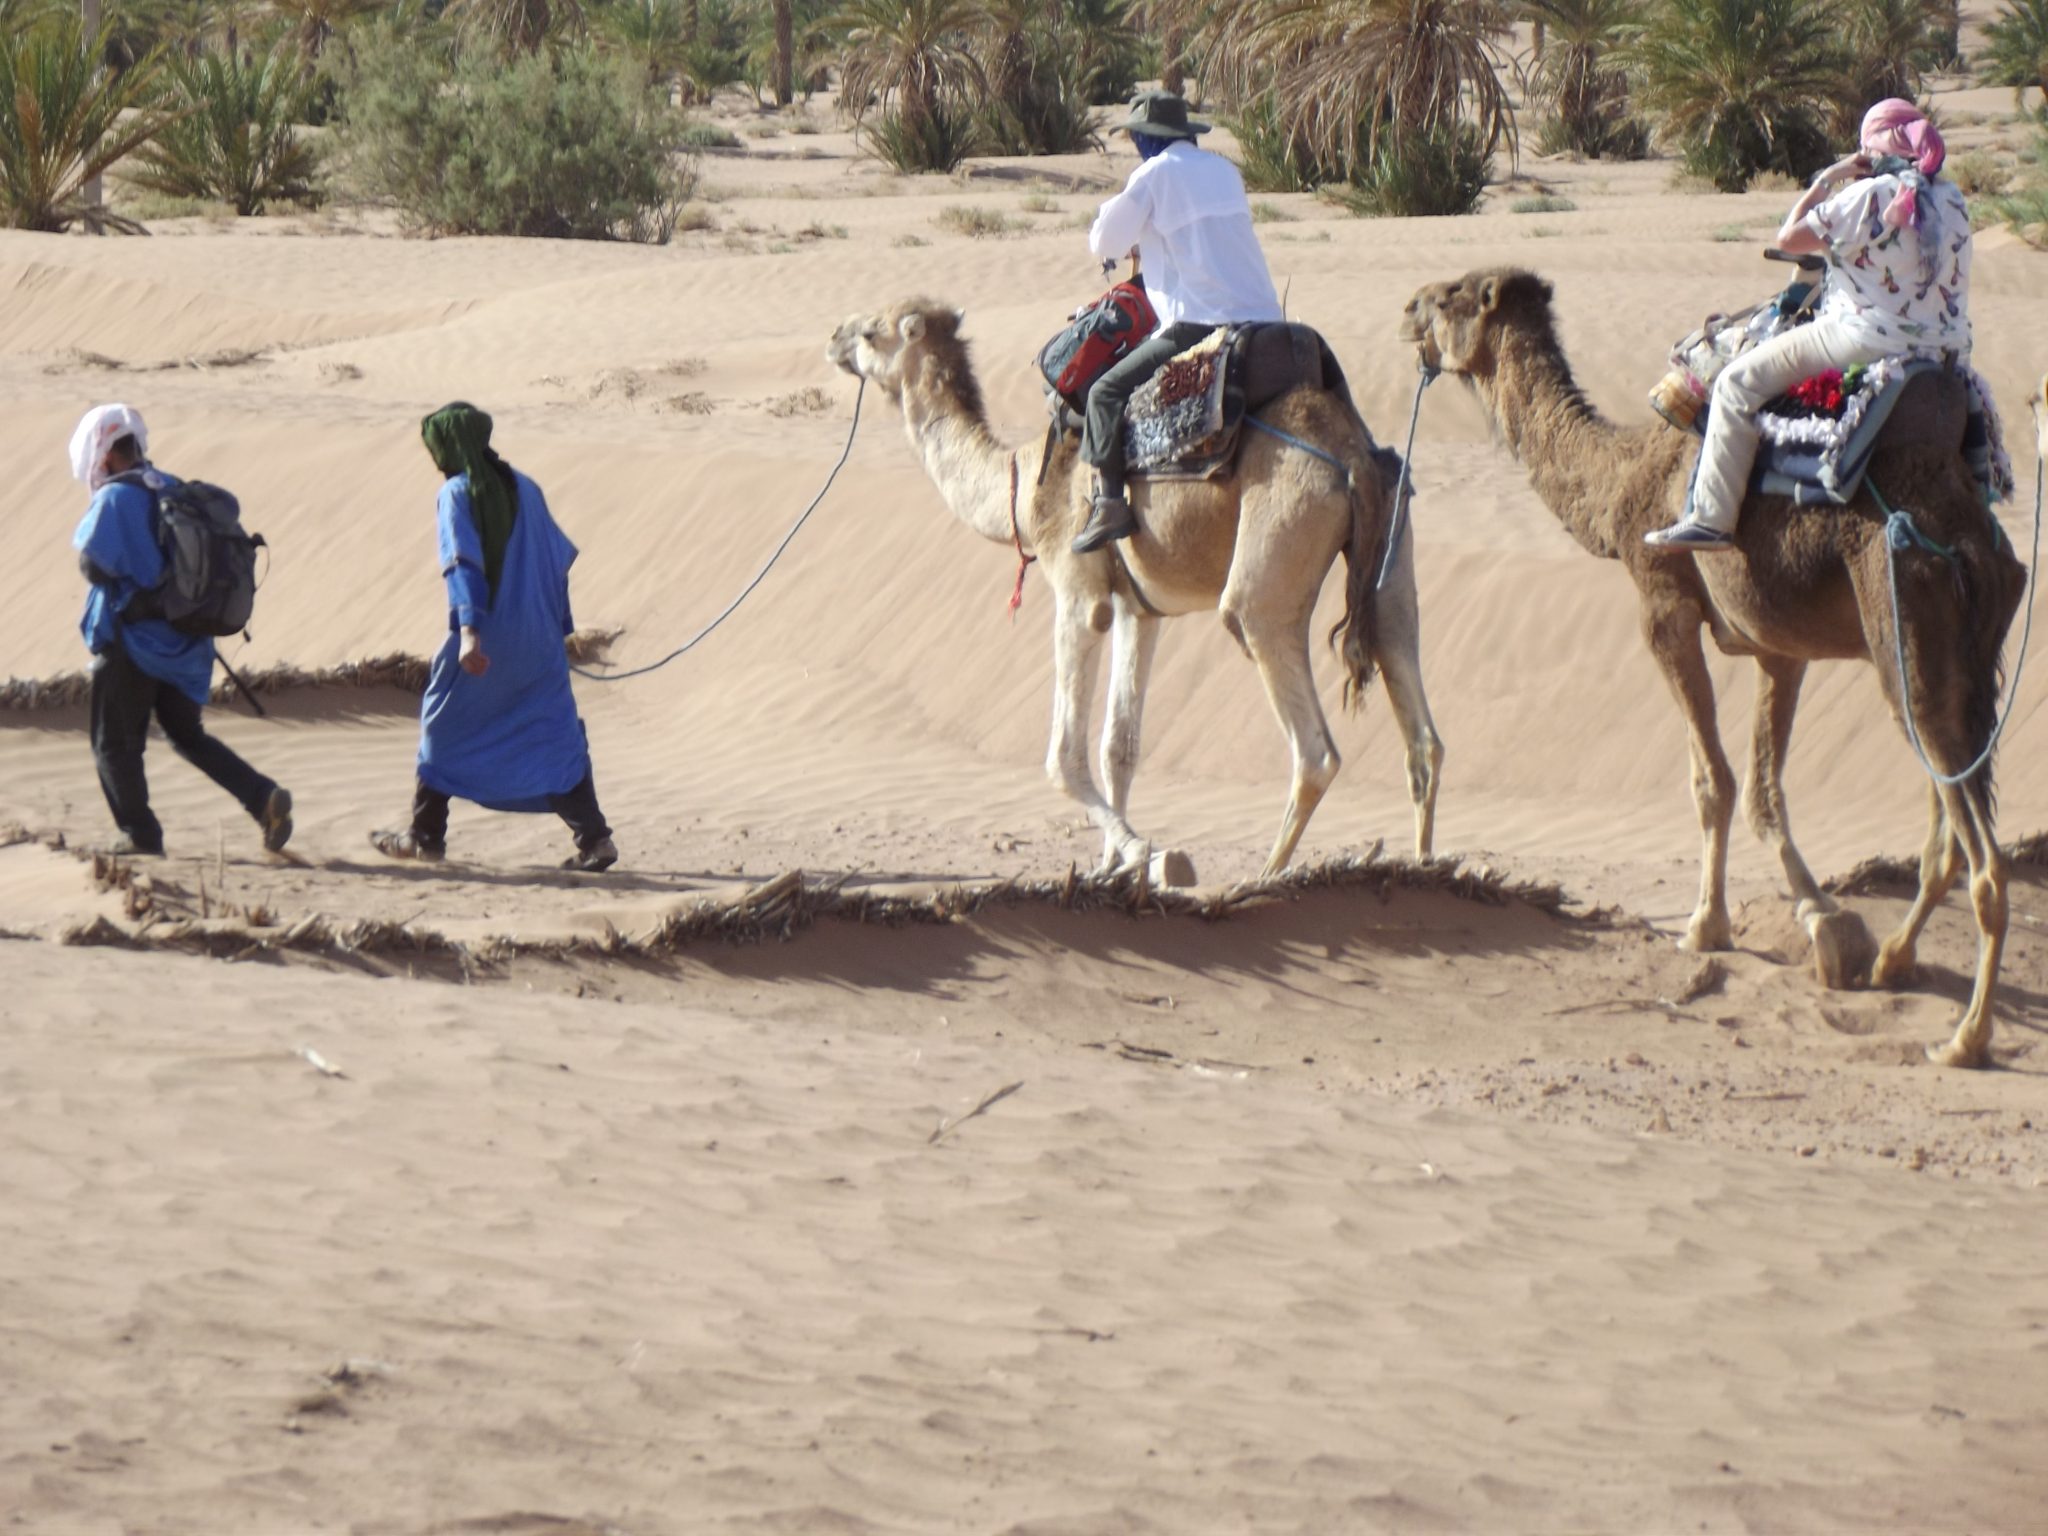 Camel trekking in the Sahara